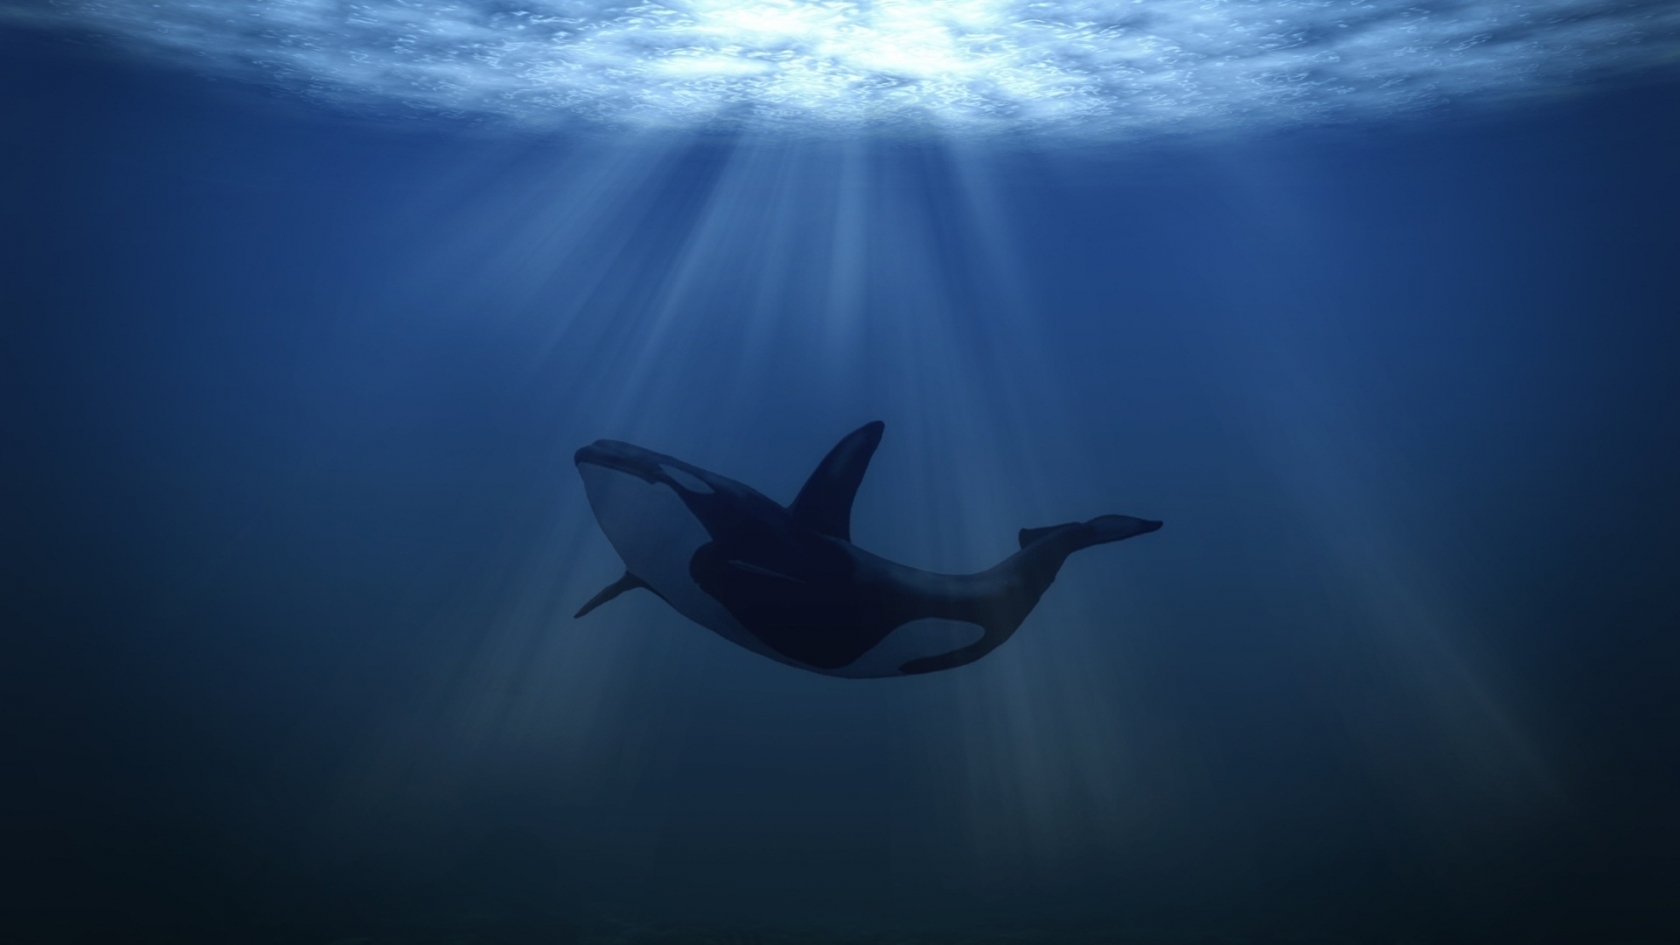 Big Whale Underwater for 1680 x 945 HDTV resolution